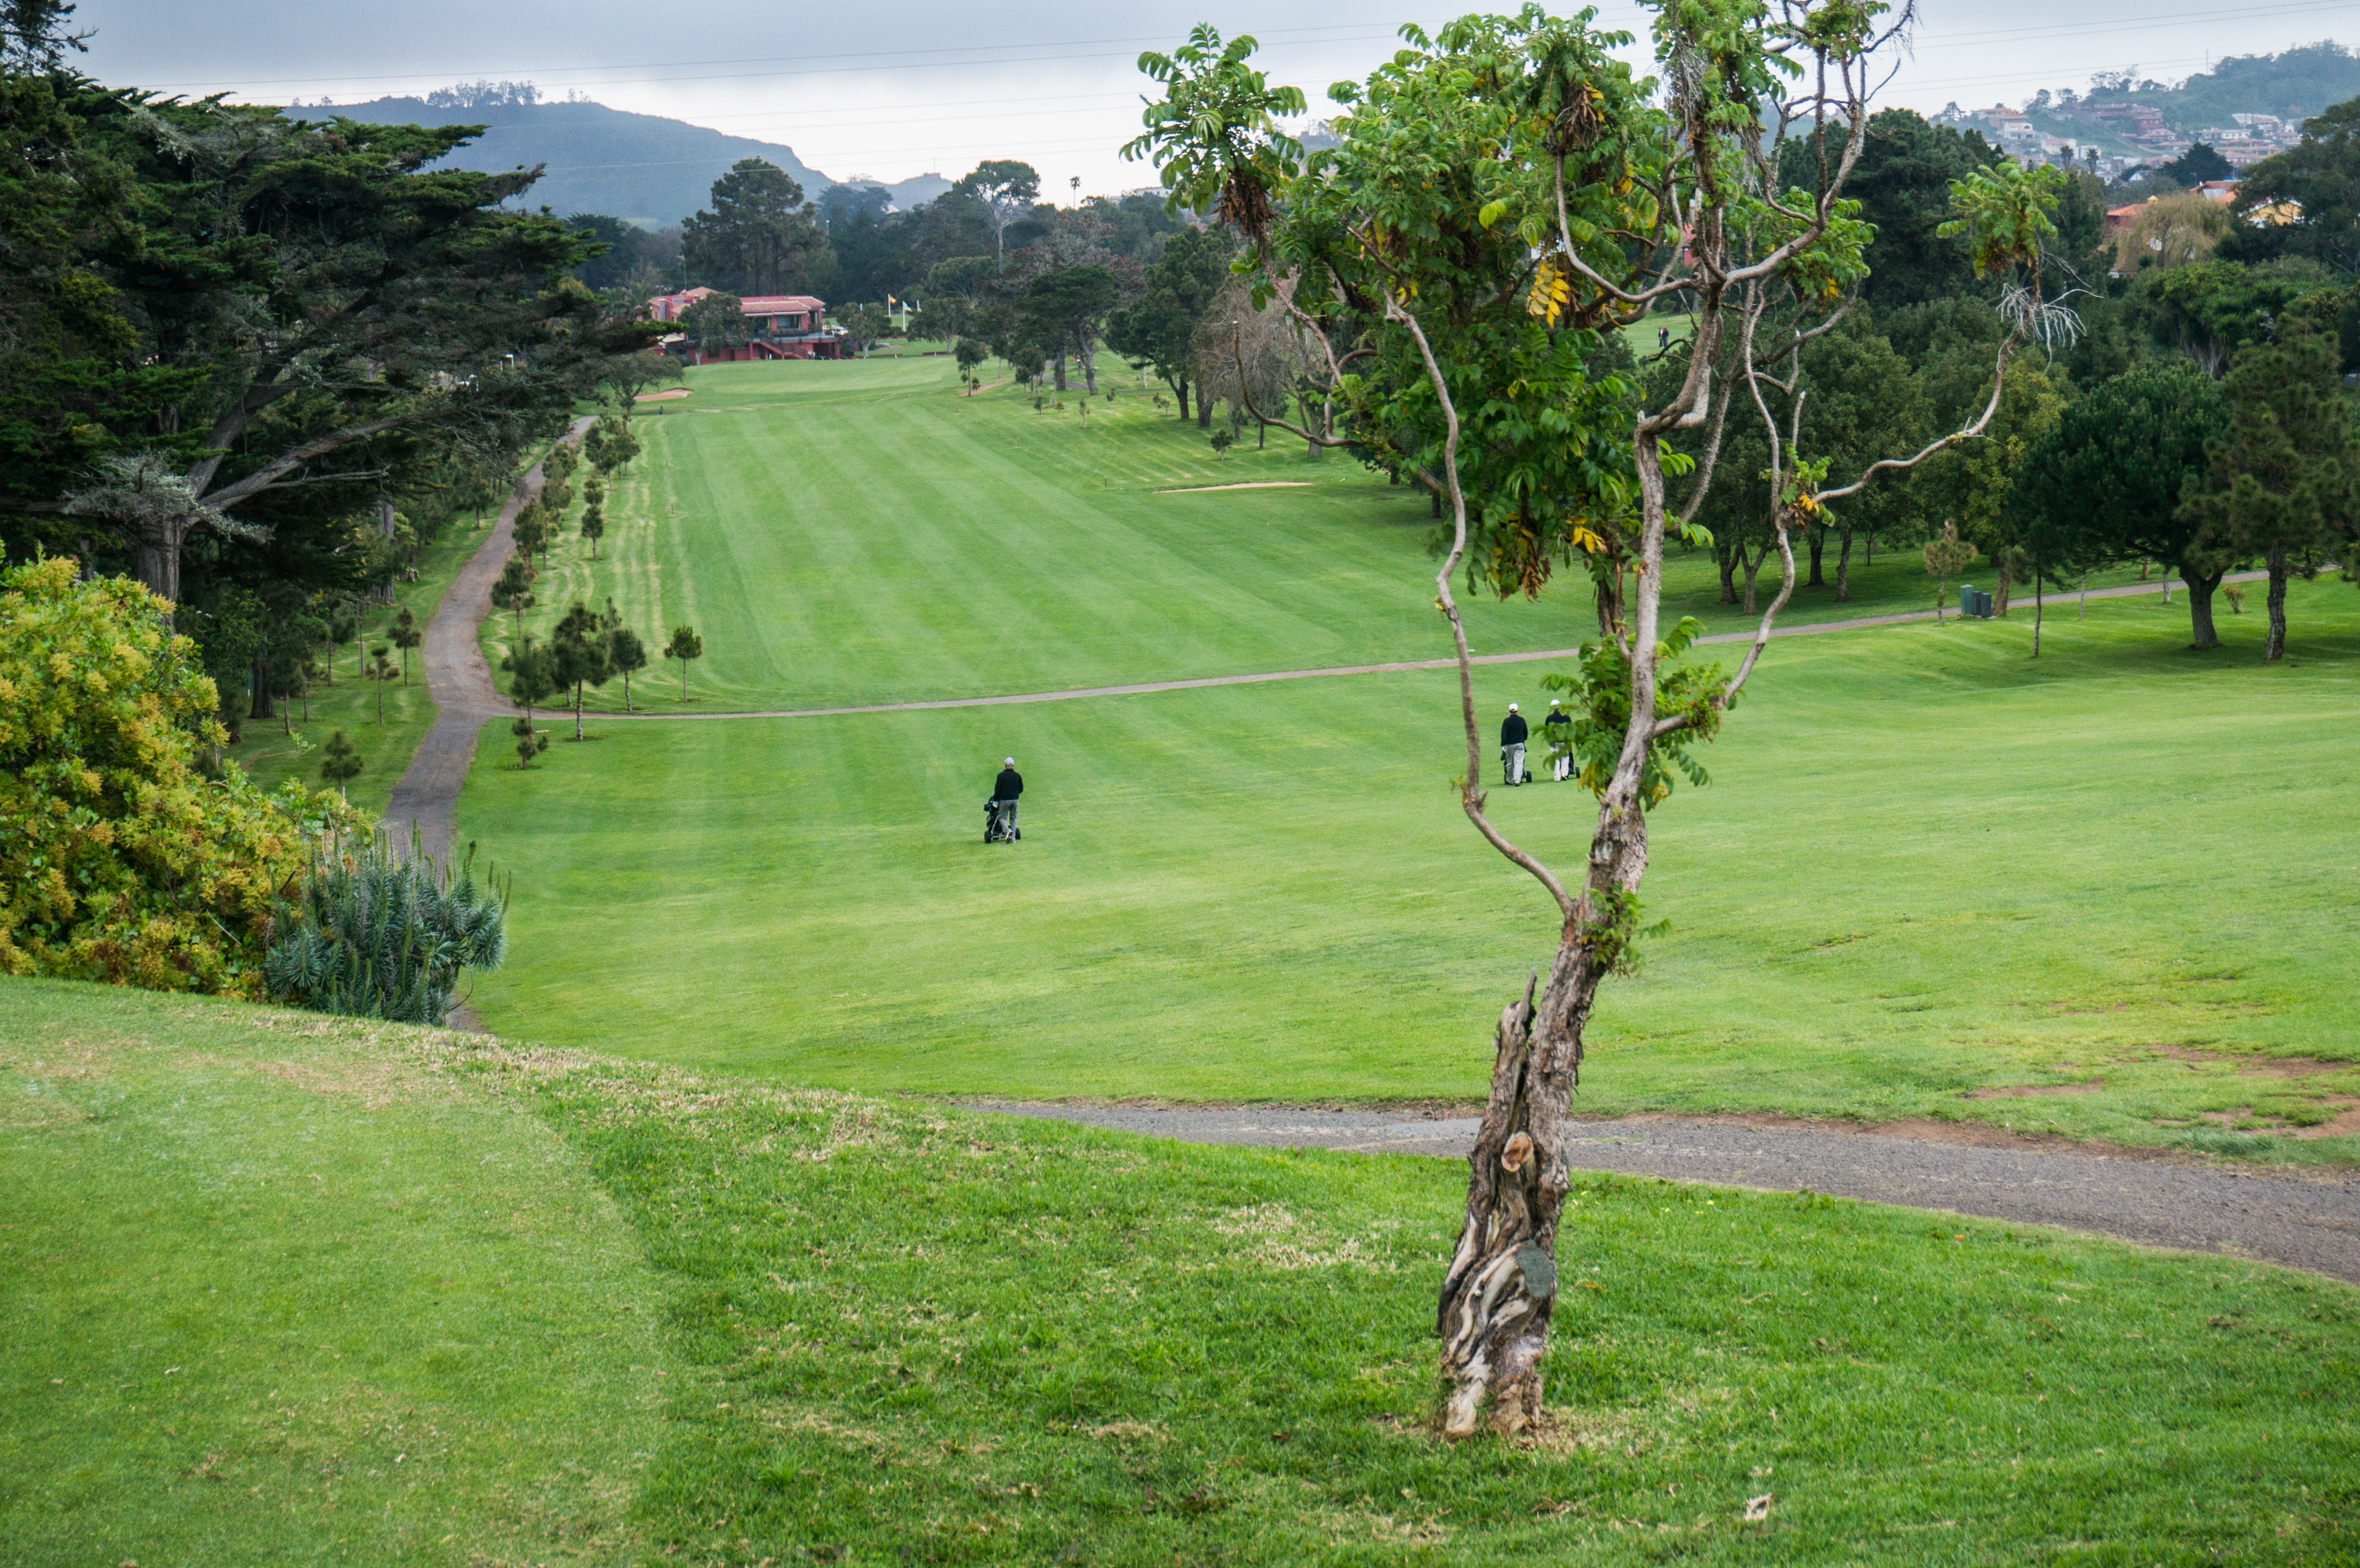 Real Club de Golf, Tenerife, Spain